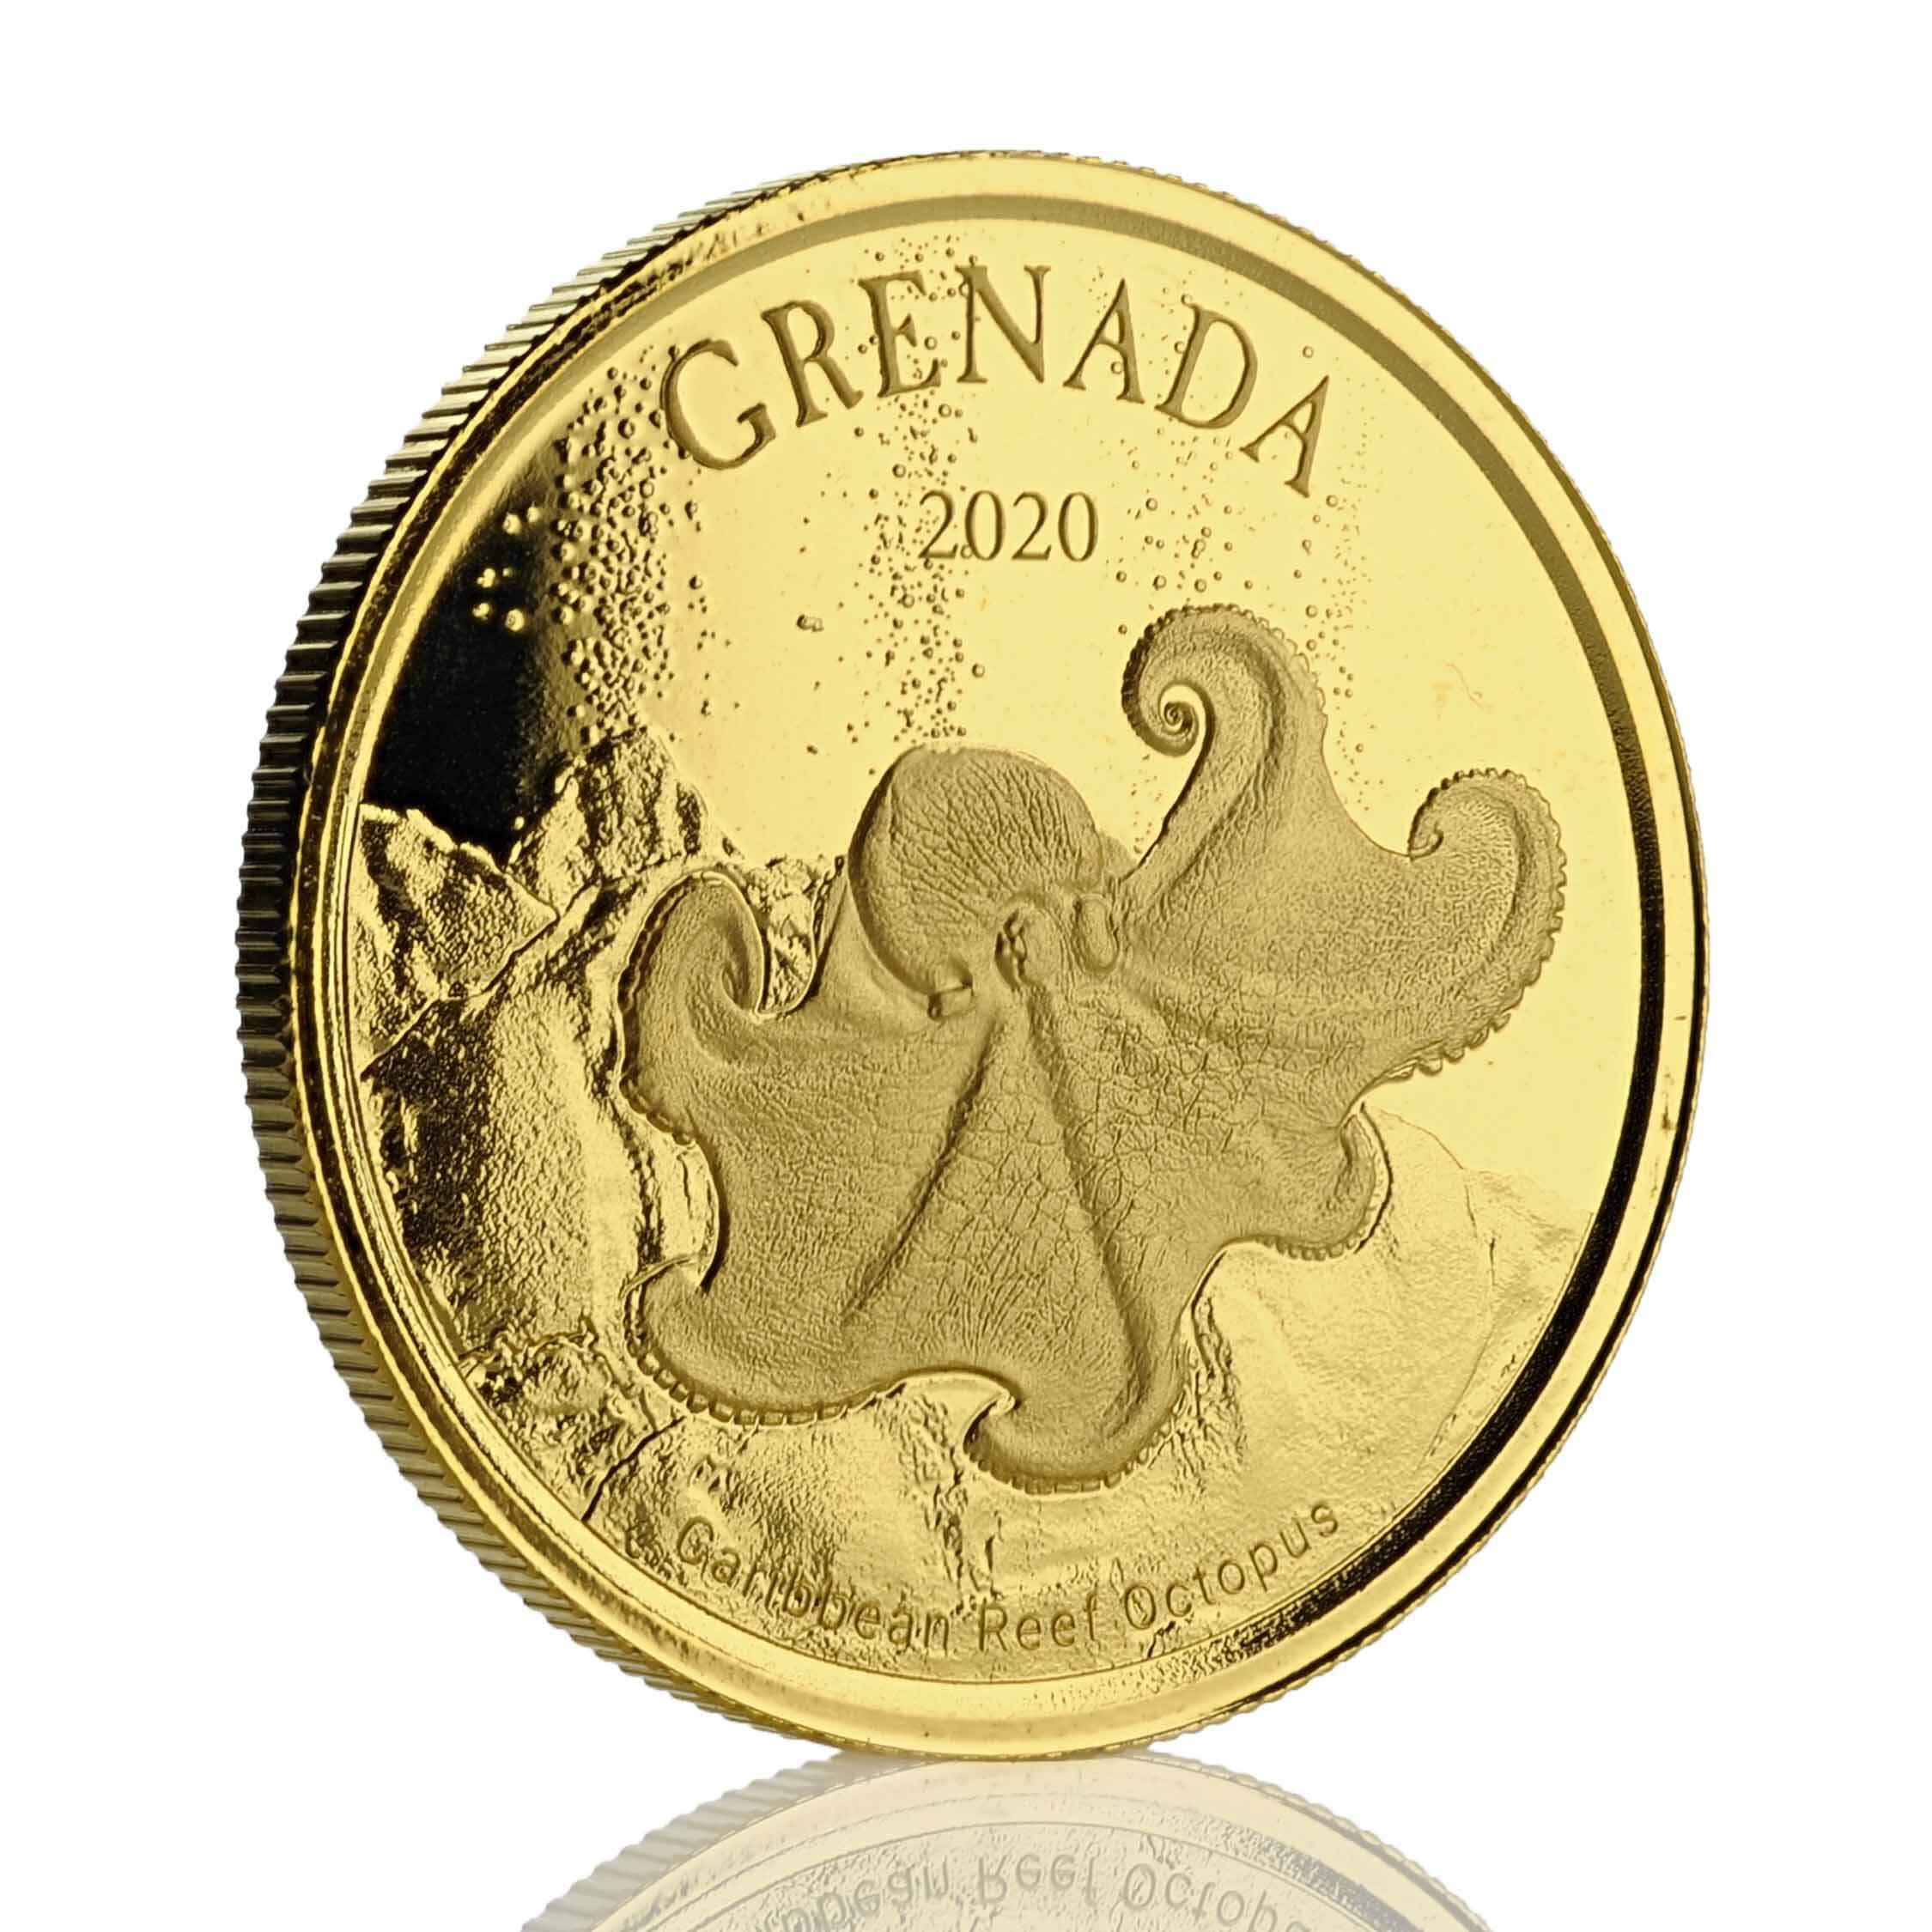 2020 Ec8 Dominica "hummingbird" 1 Oz Gold Coin (copy)